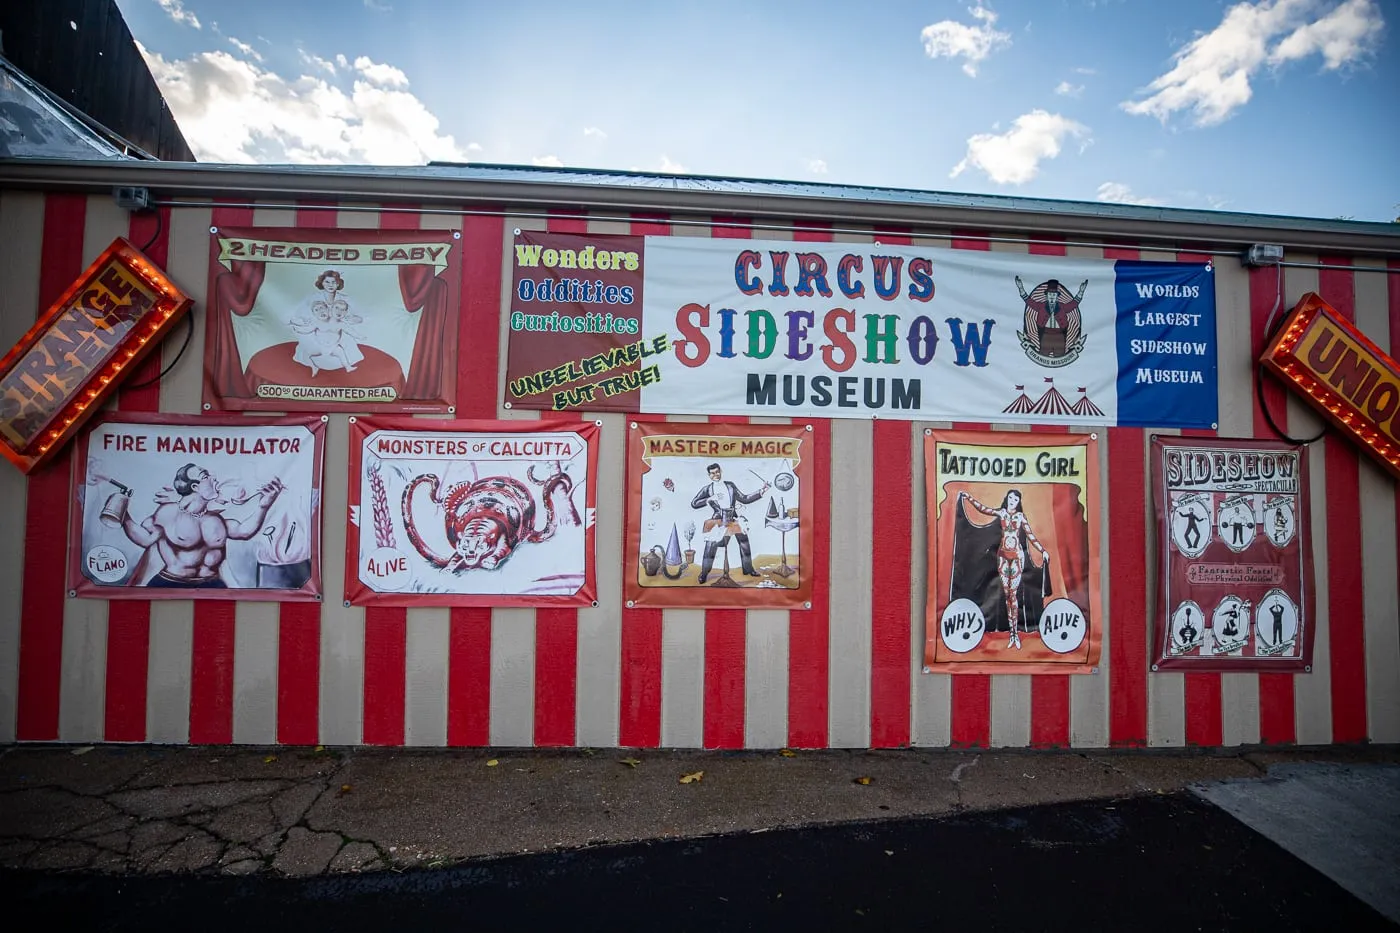 Circus Sideshow at Uranus, Missouri and the Uranus Fudge Factory and General Store - Route 66 Roadside Attraction